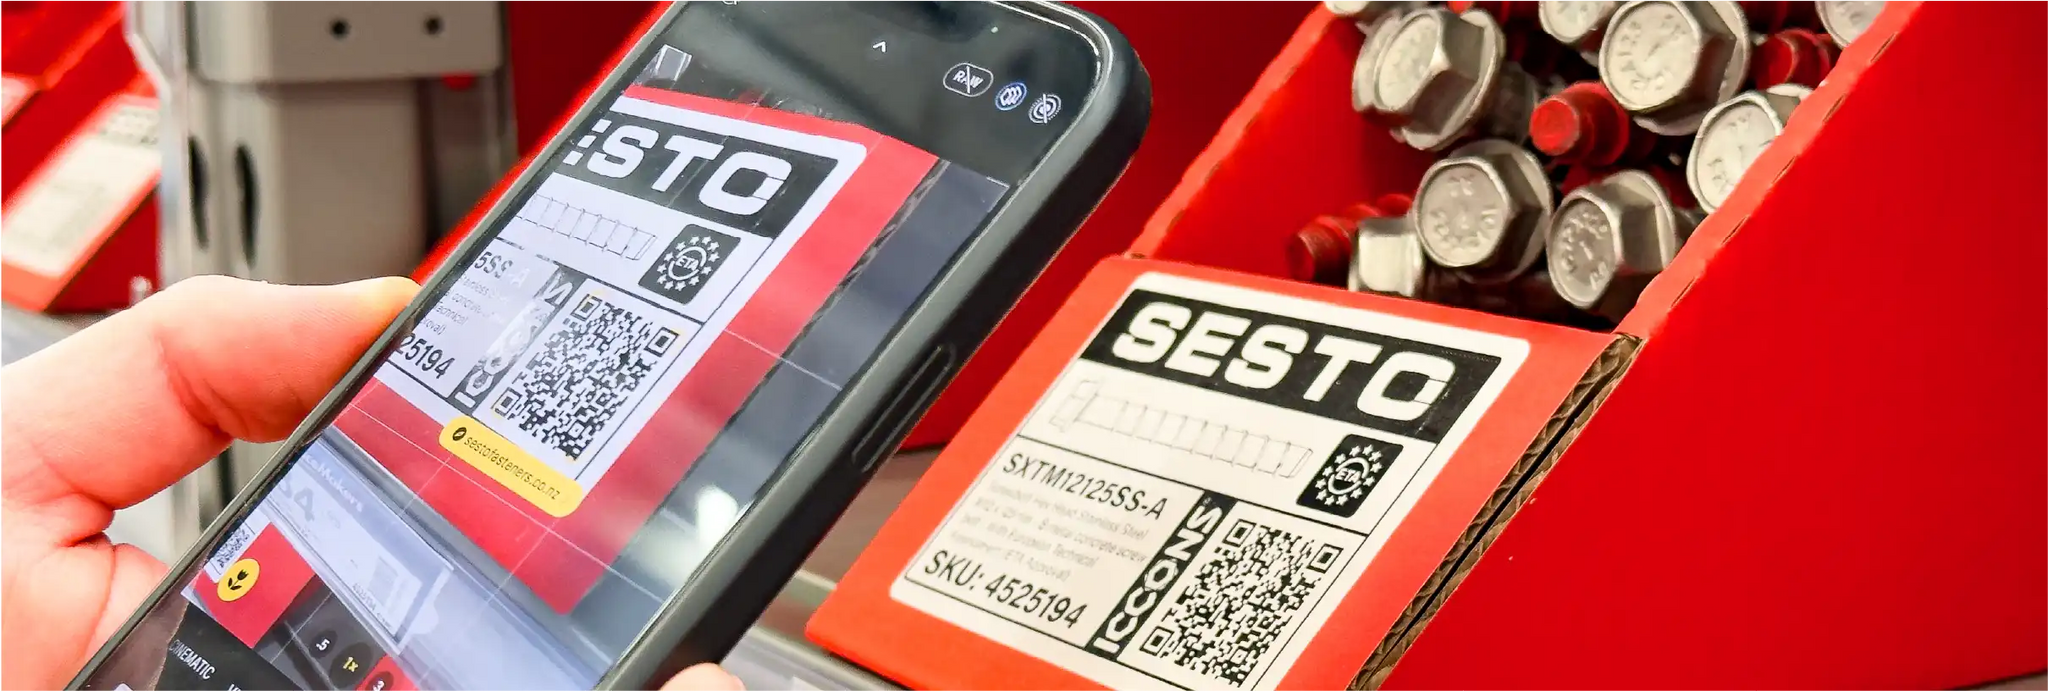 Phone scanning QR code on Sesto box.